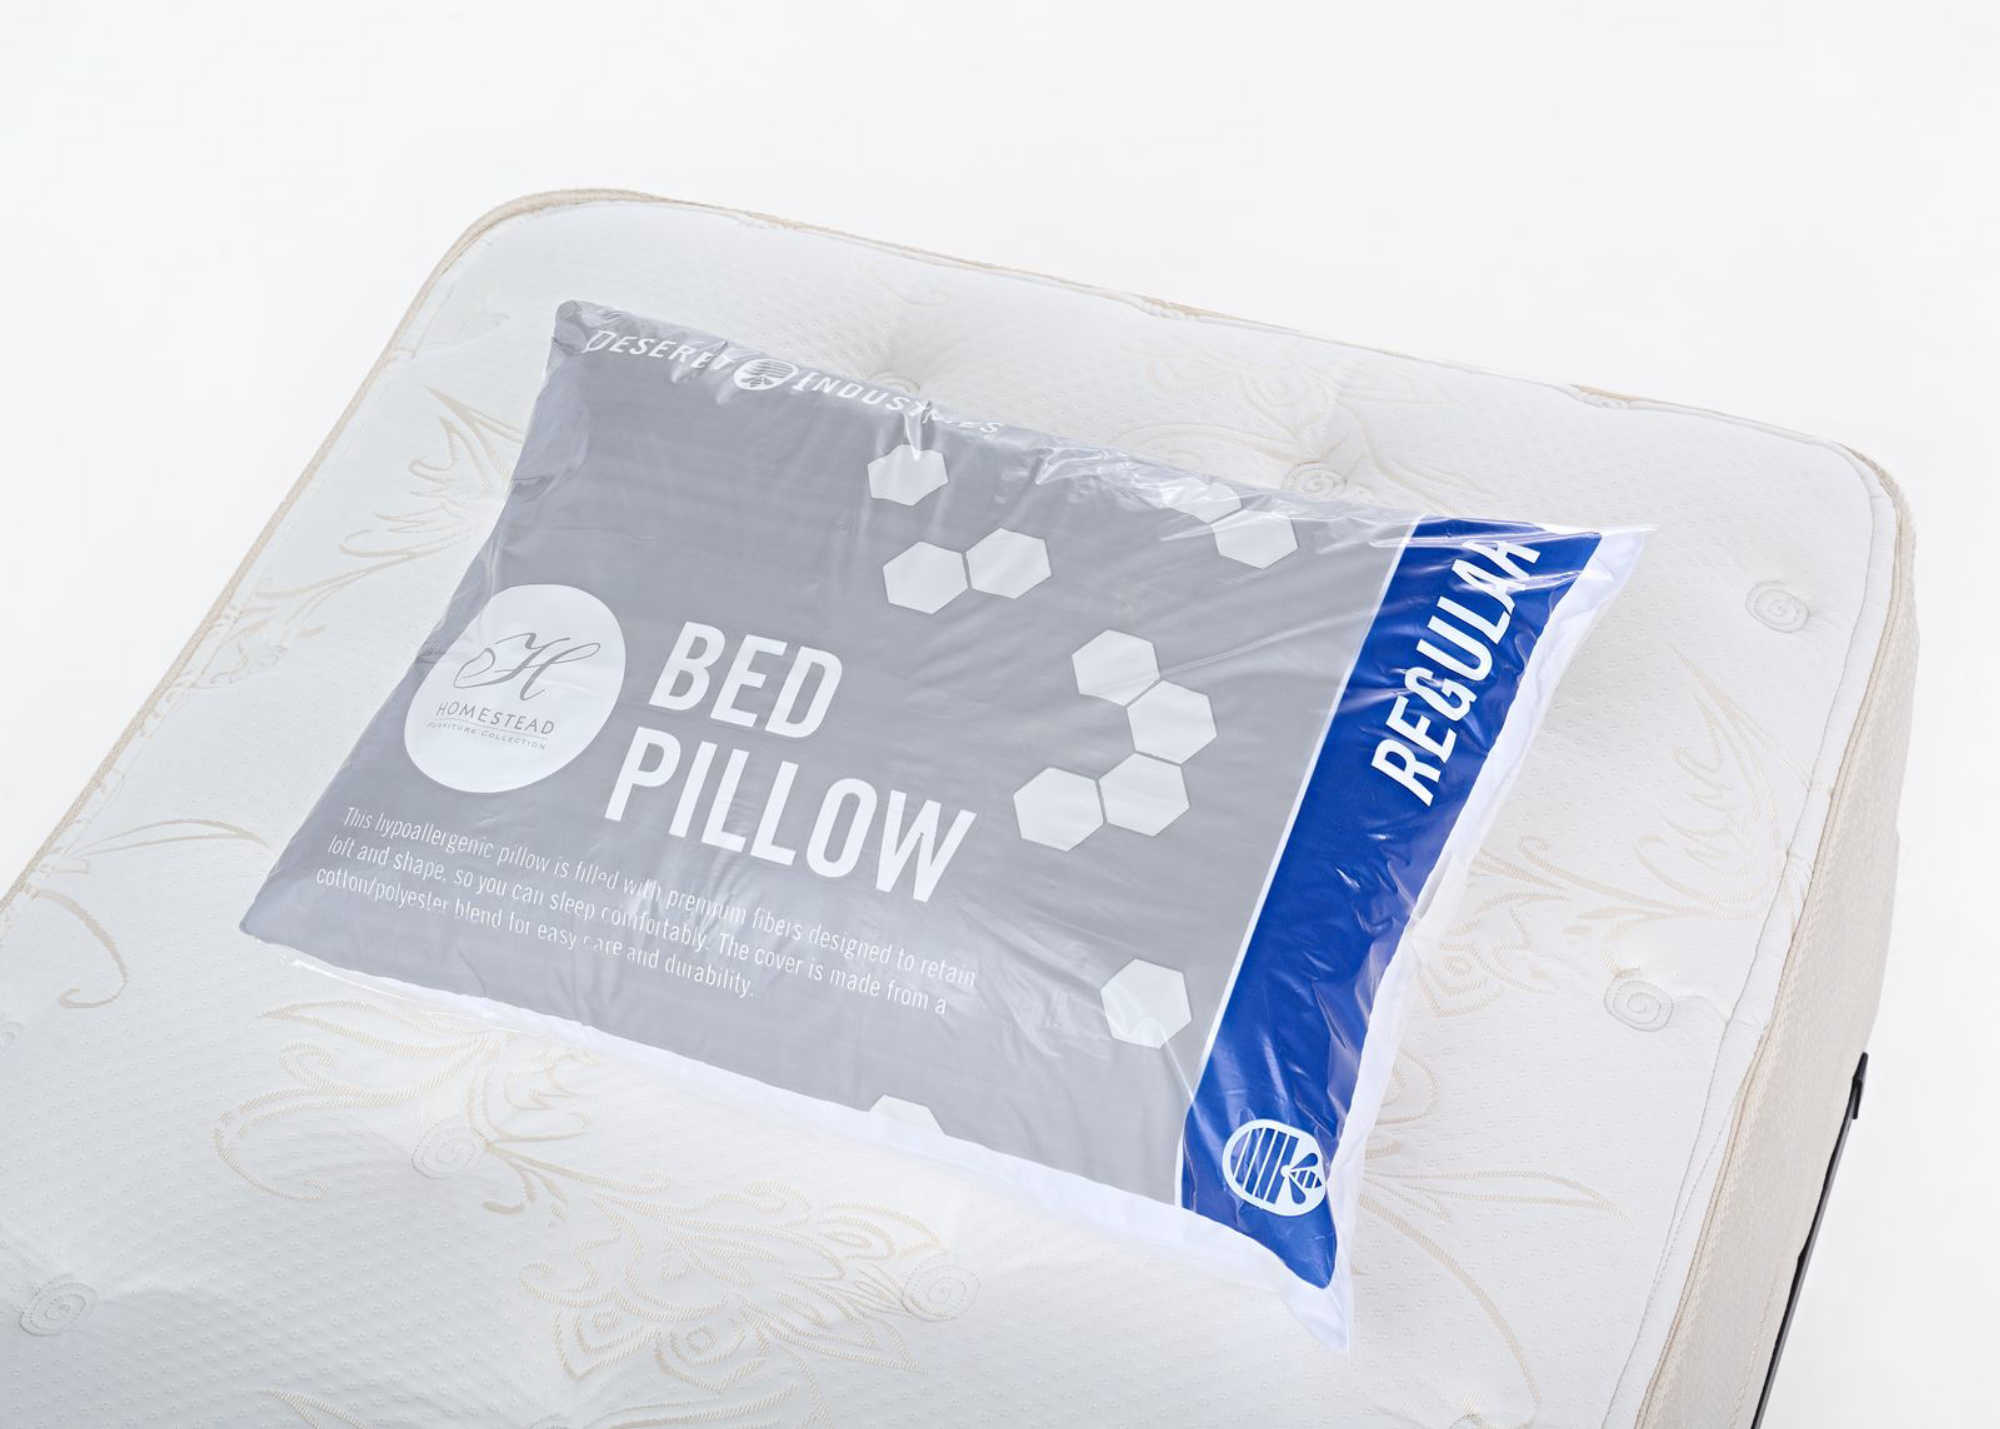 Regular pillow packaged on twin